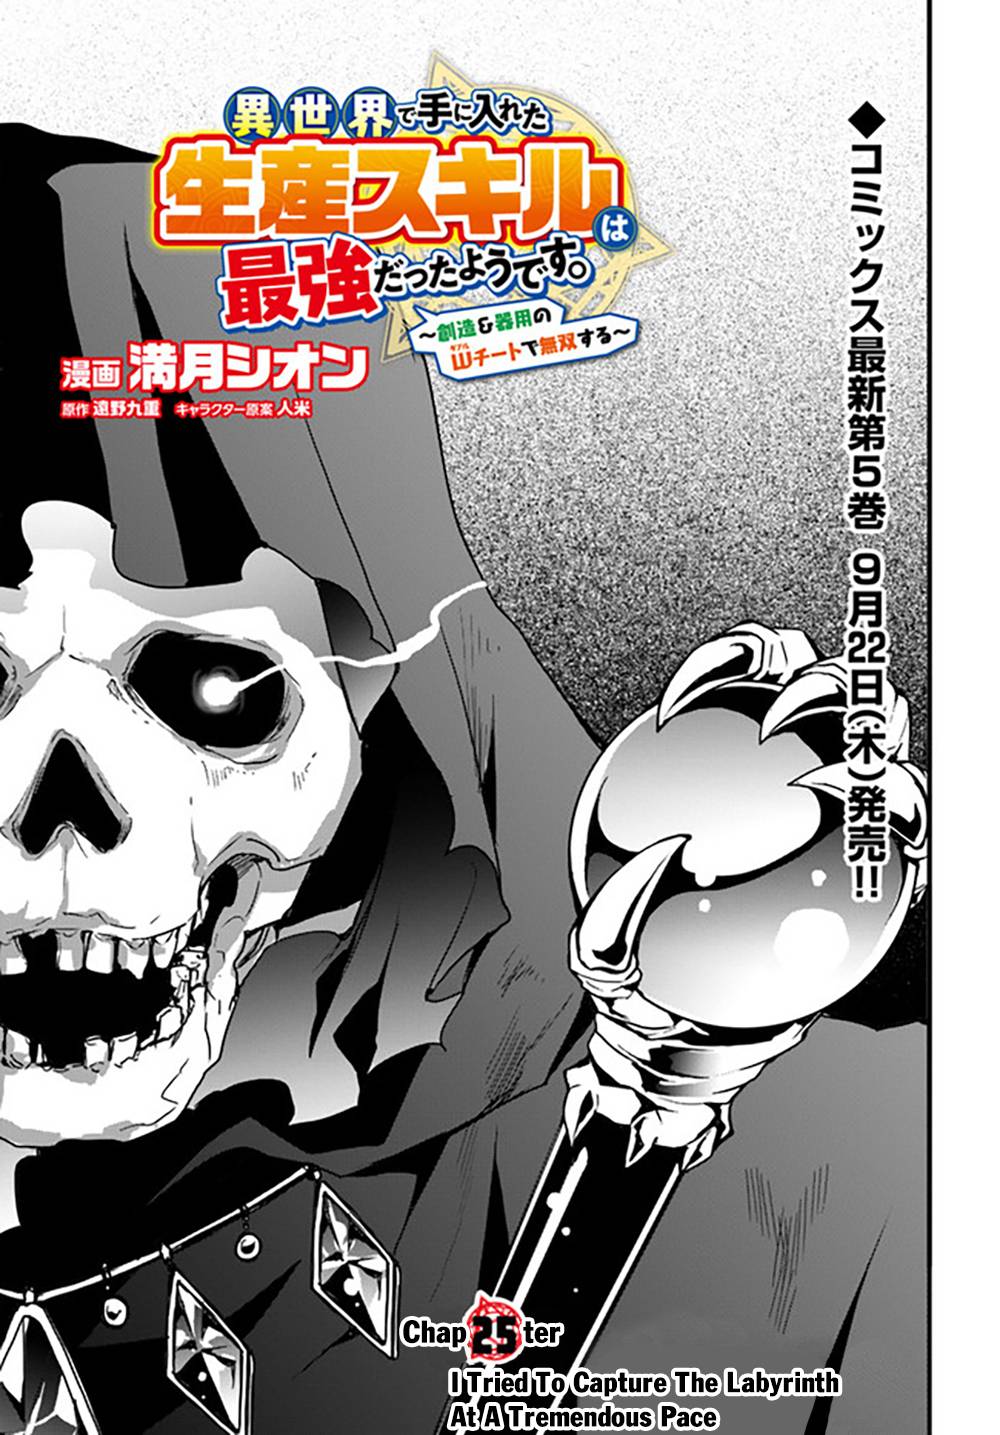 DISC] Isekai de Cheat Skill wo Te ni Shita Ore wa, Genjitsu Sekai wo mo  Musou Suru - Chapter 25 : r/manga